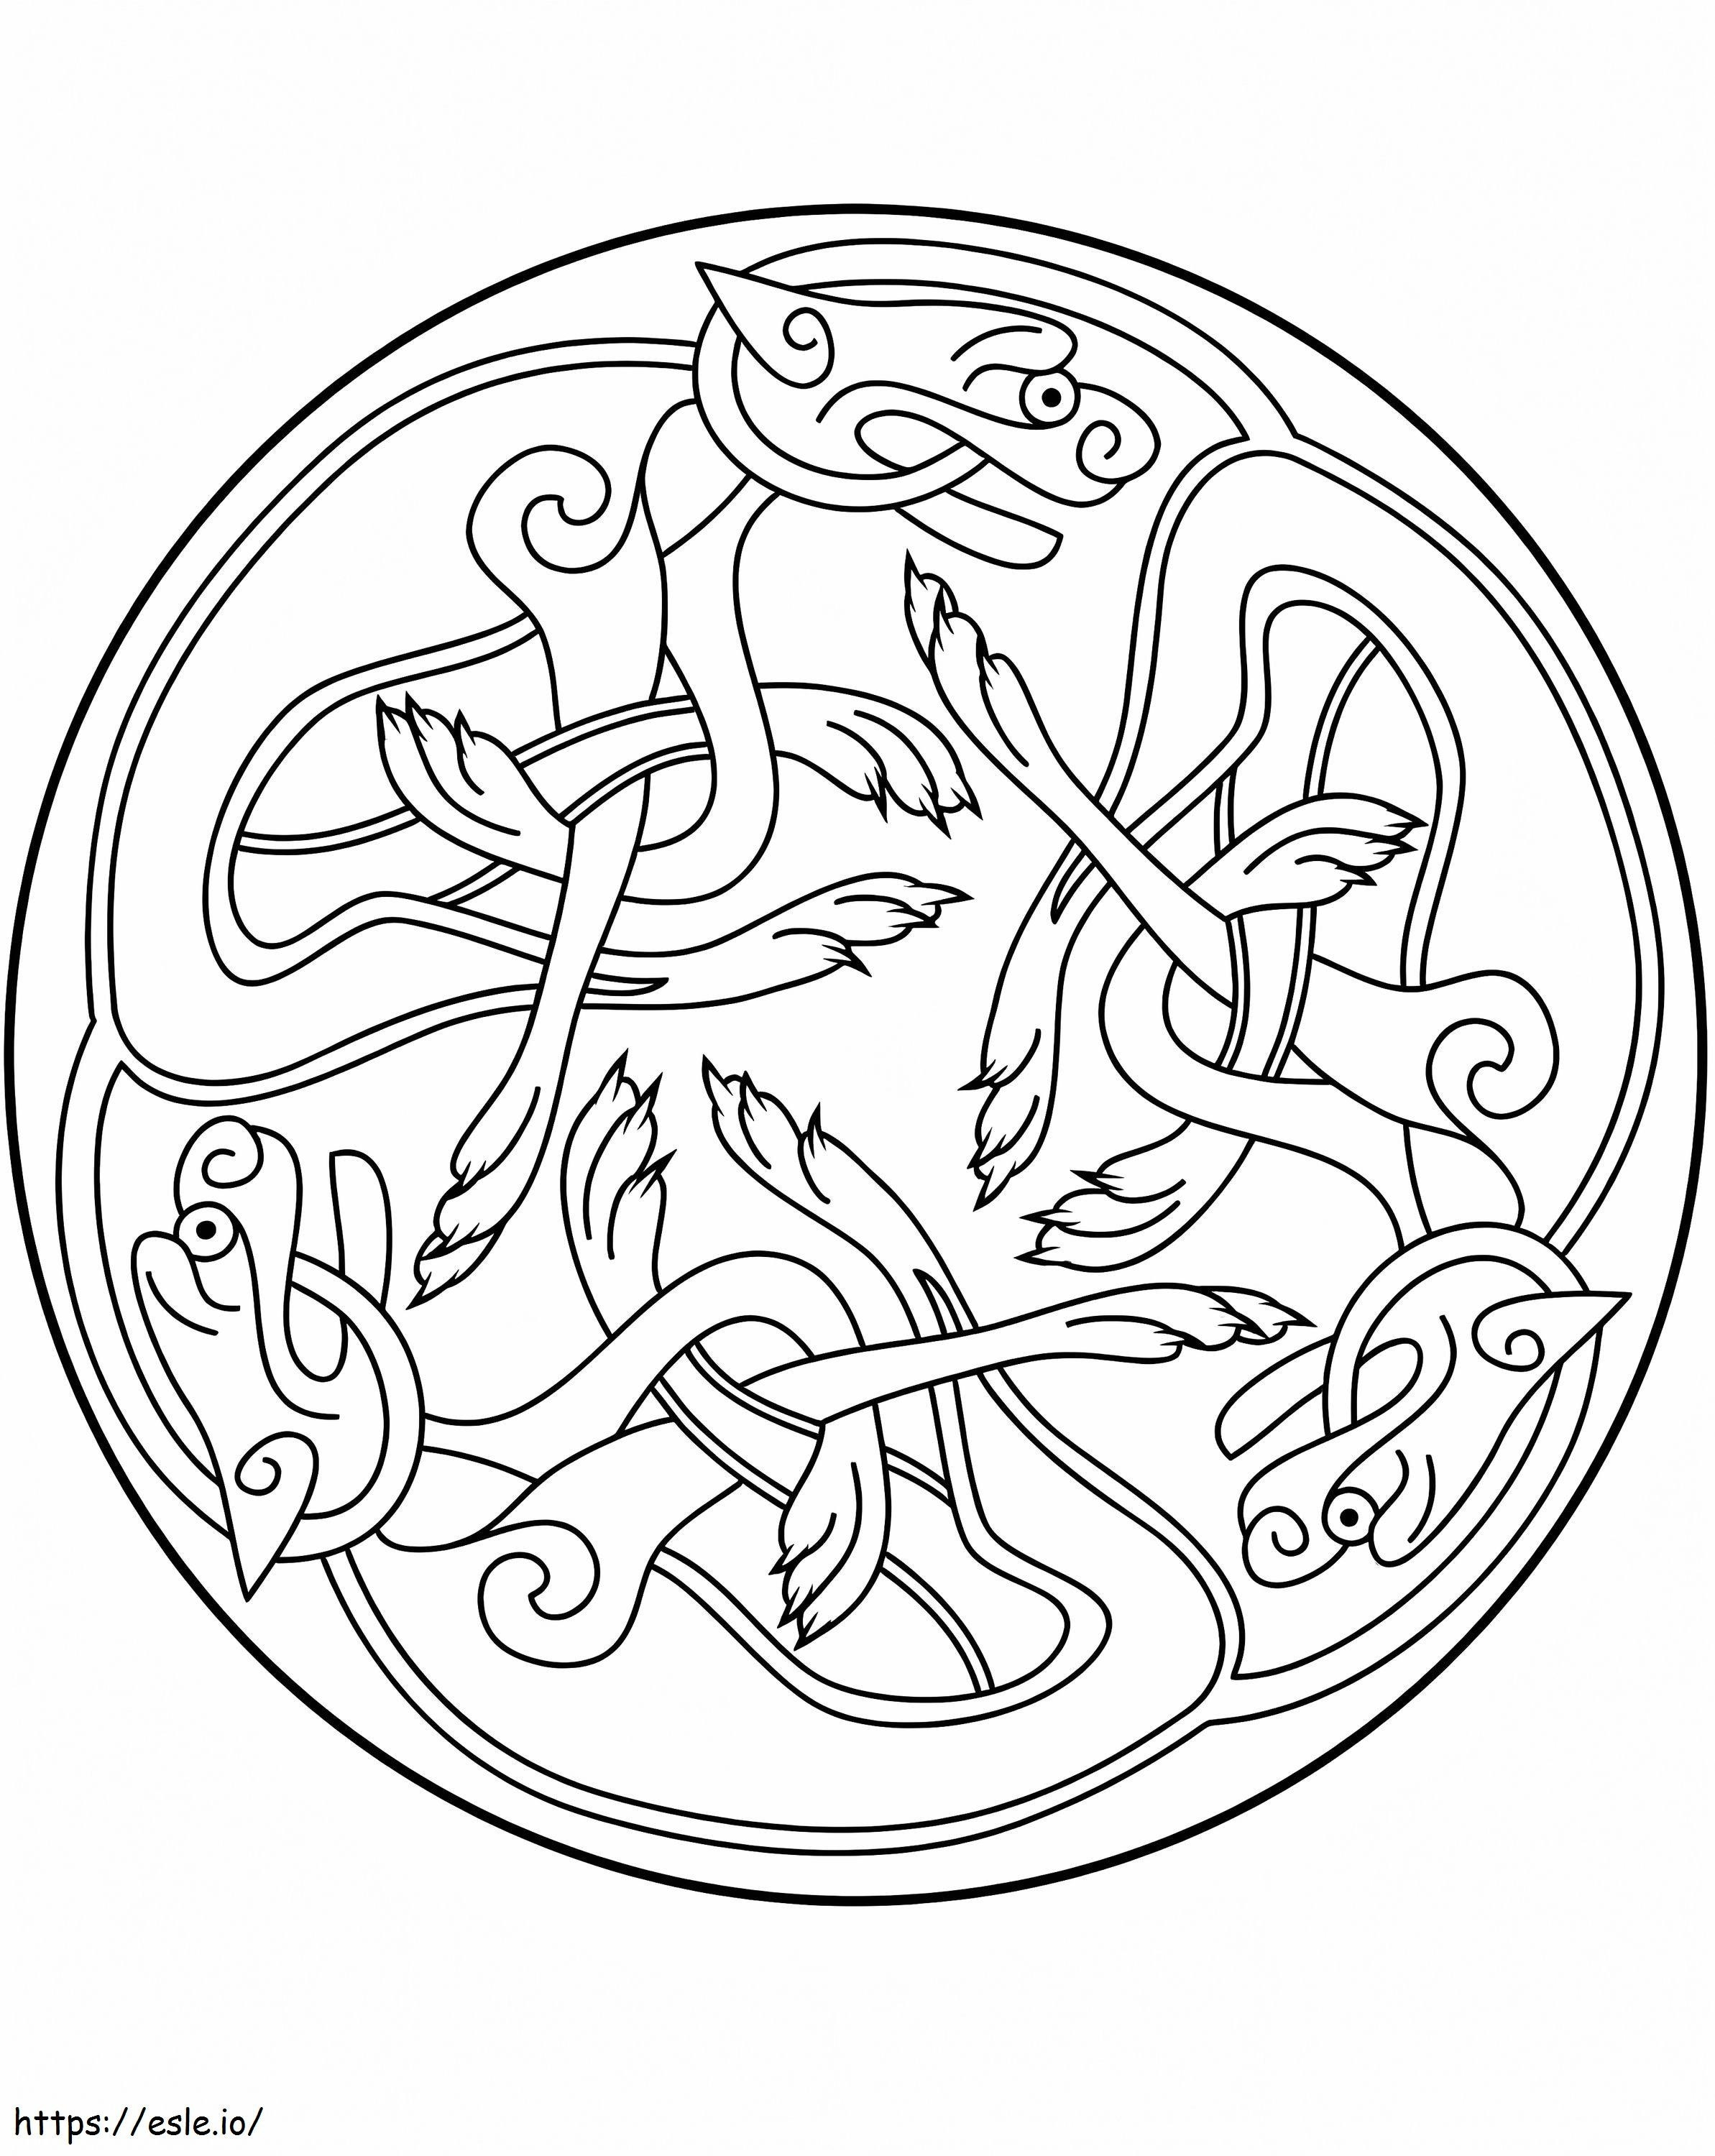 Diseño de ornamento celta para colorear